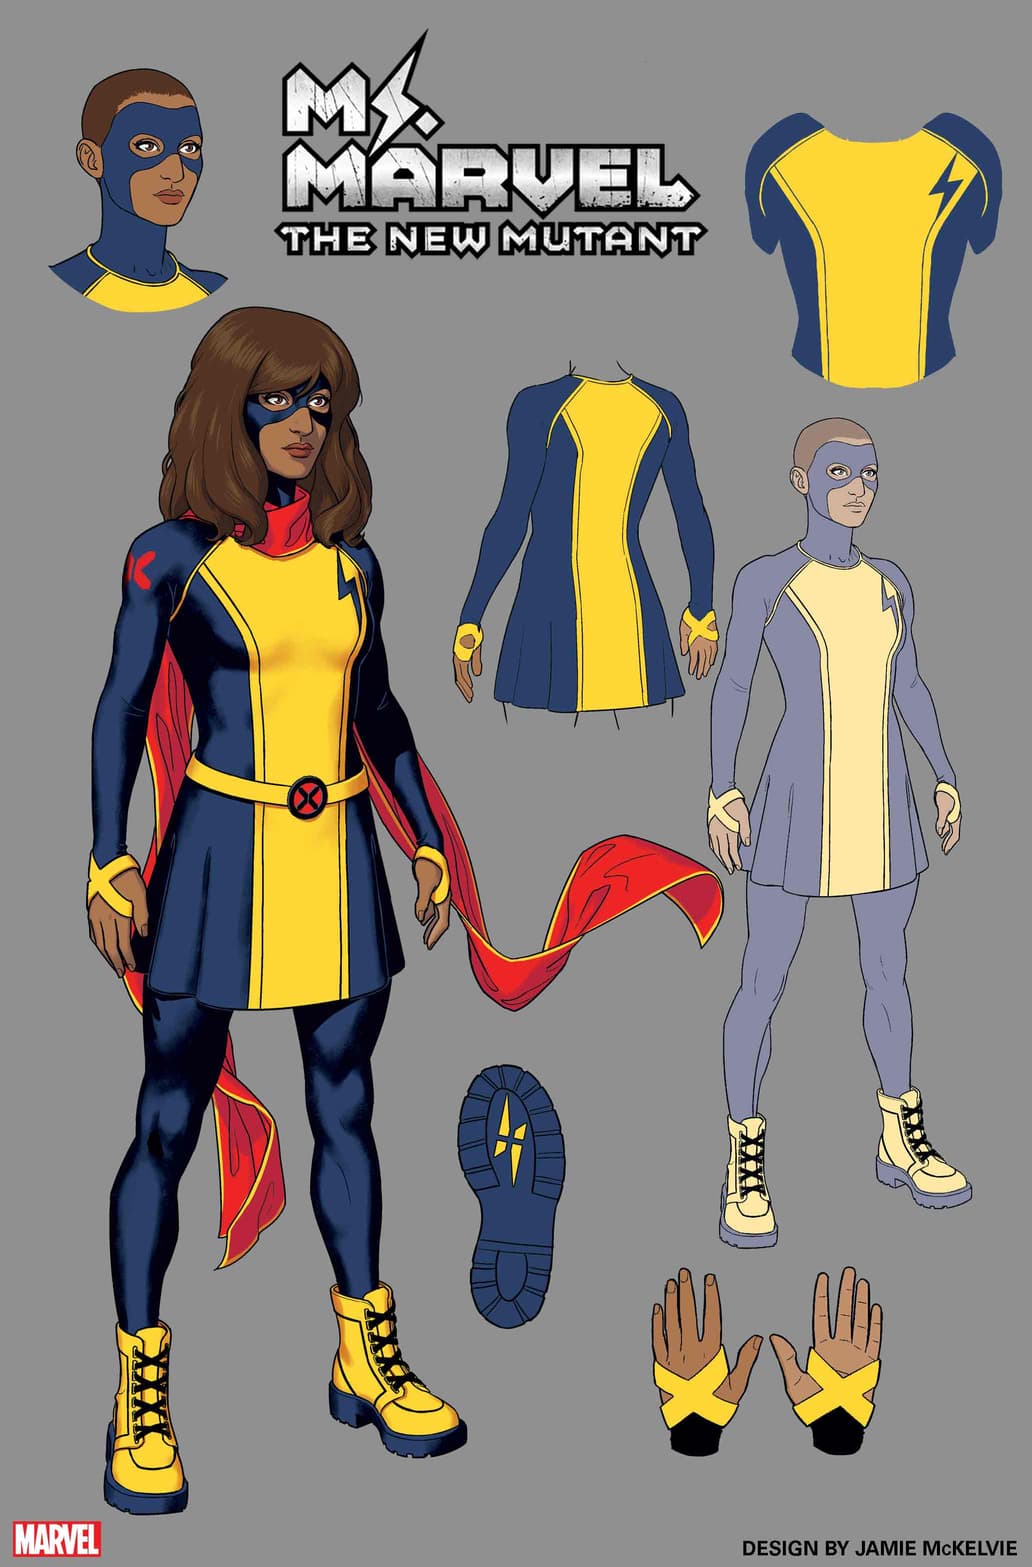 Ms. Marvel's new X-uniform, as designed by Jamie McKelvie